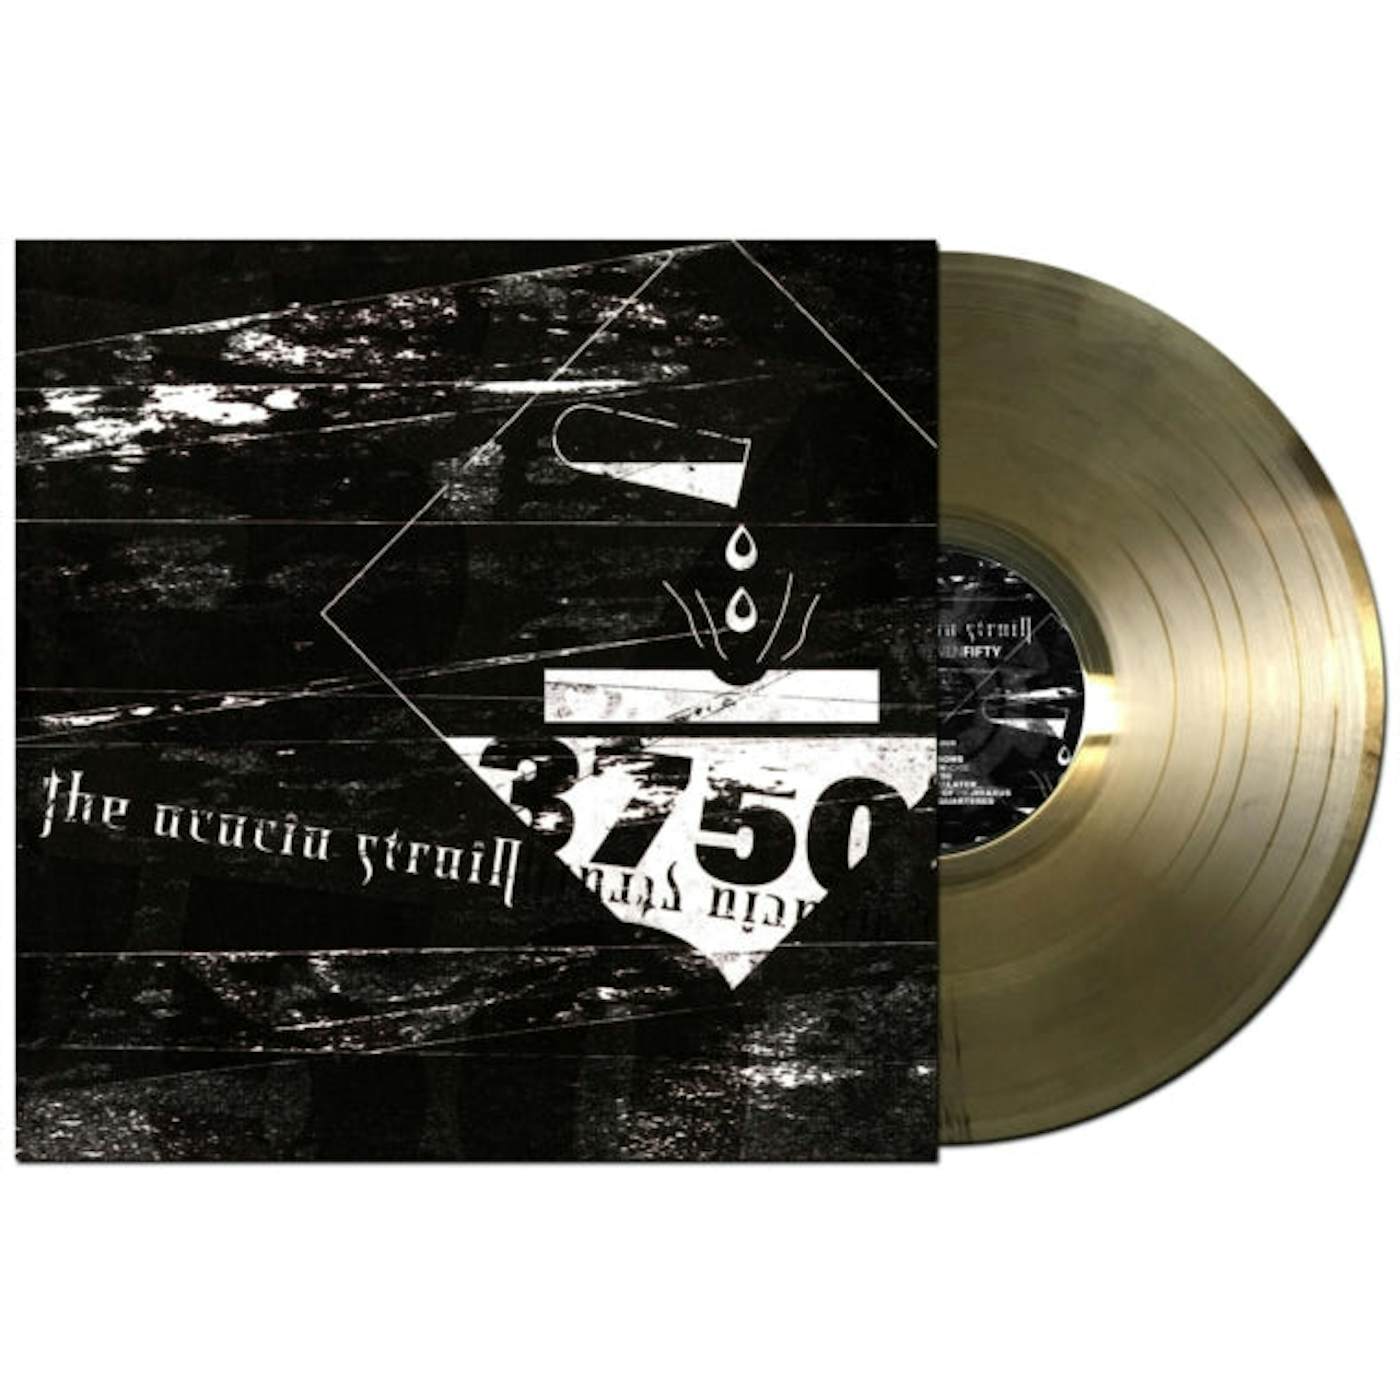 The Acacia Strain LP - 3750 (Vinyl)